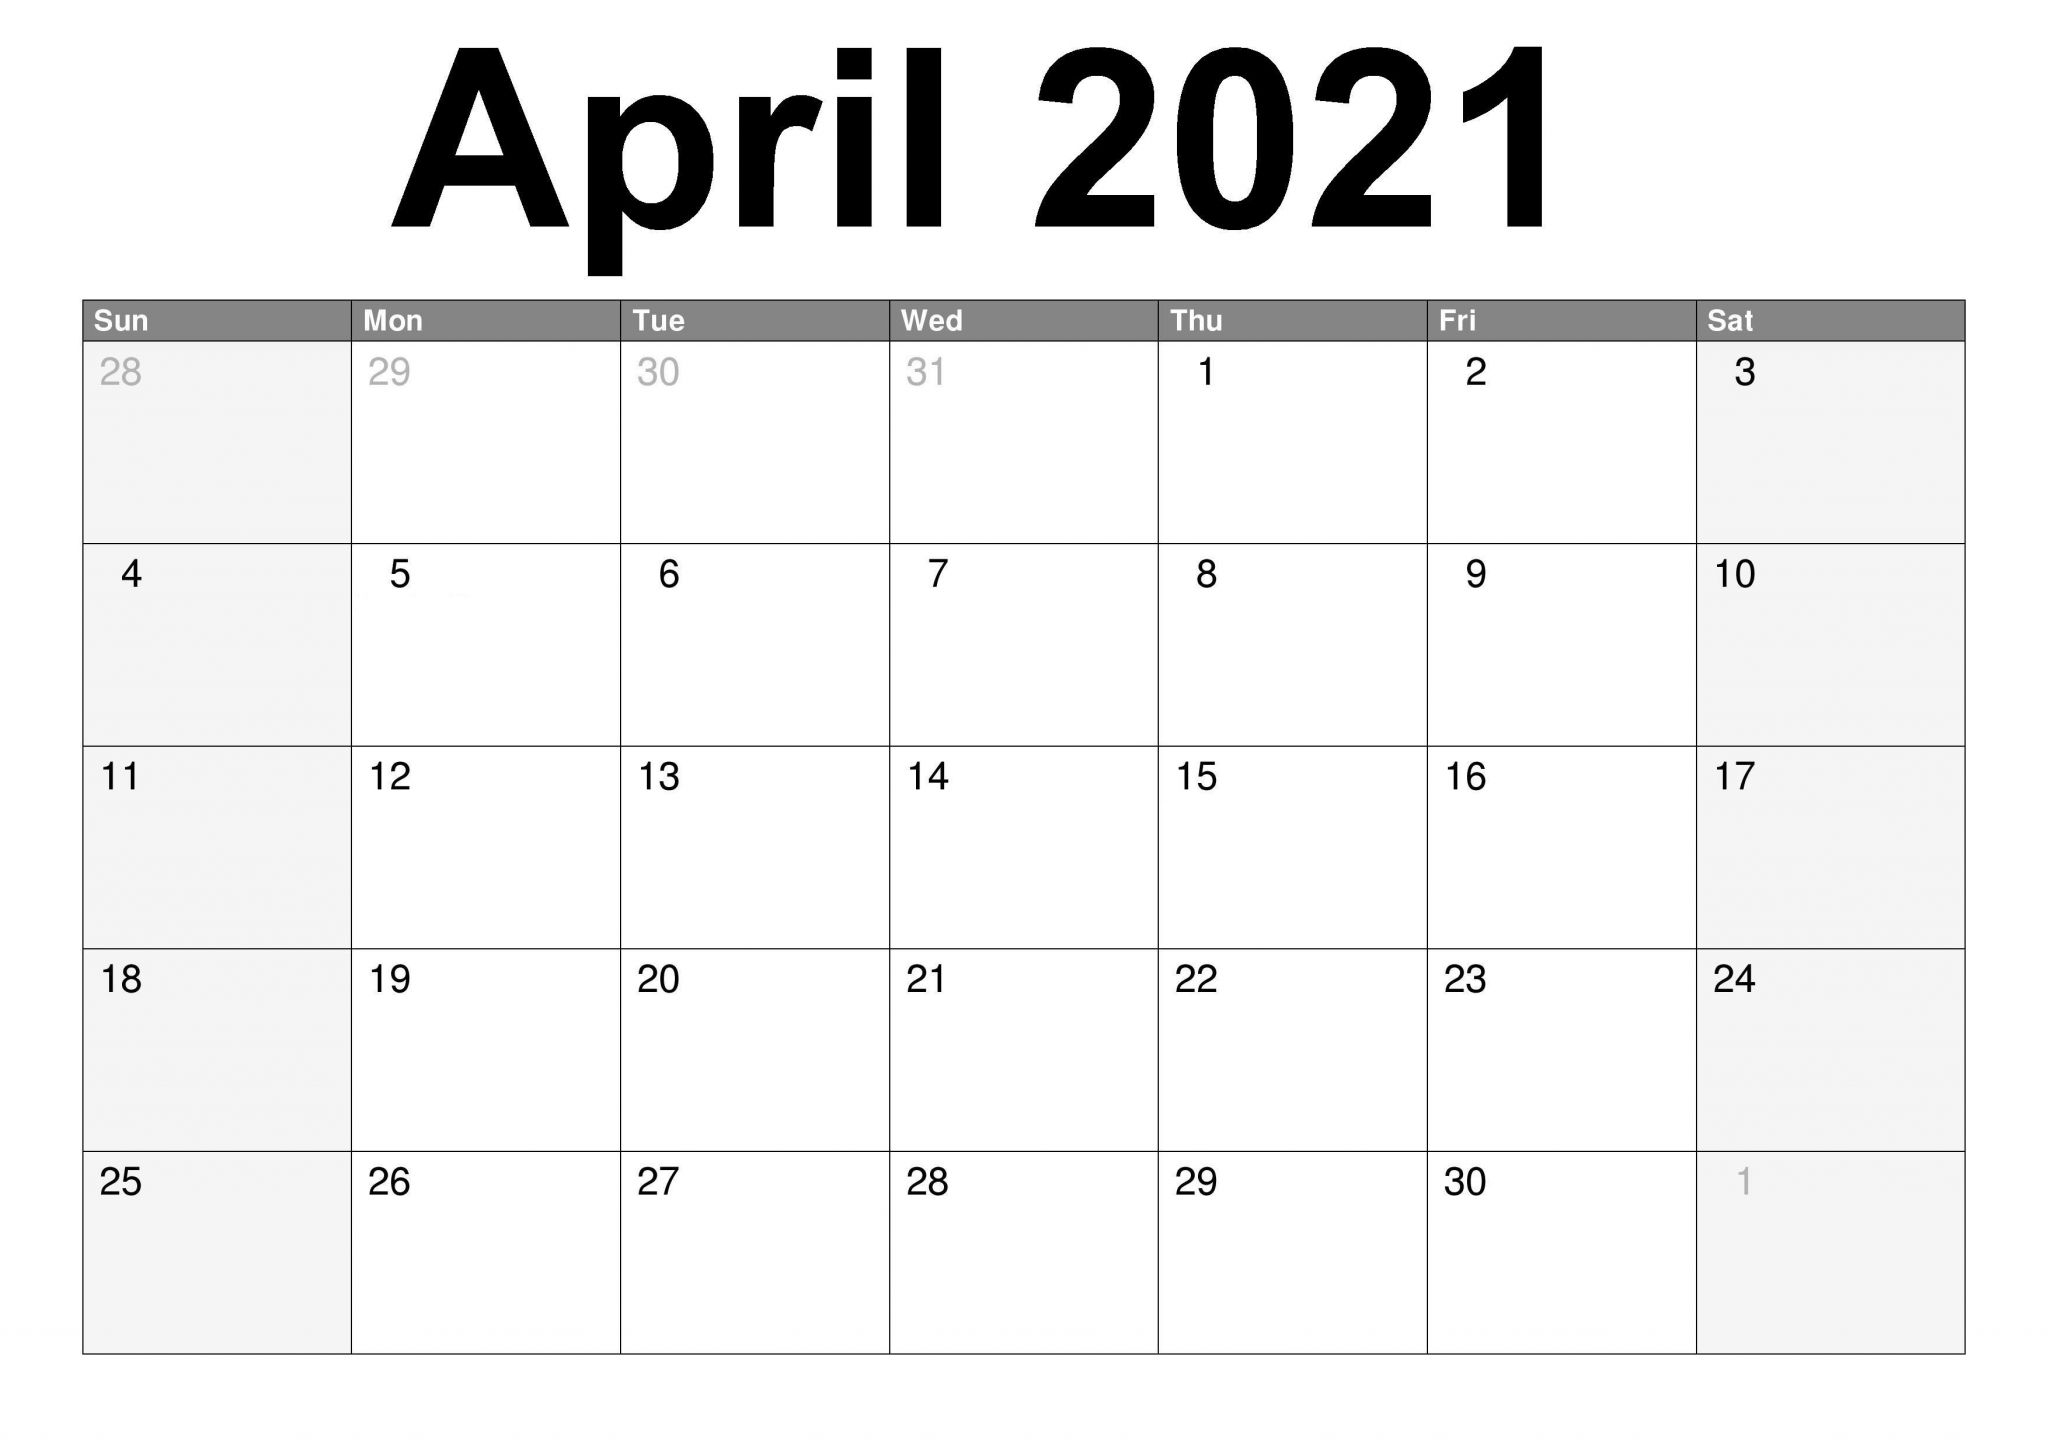 apr 2021 calendar